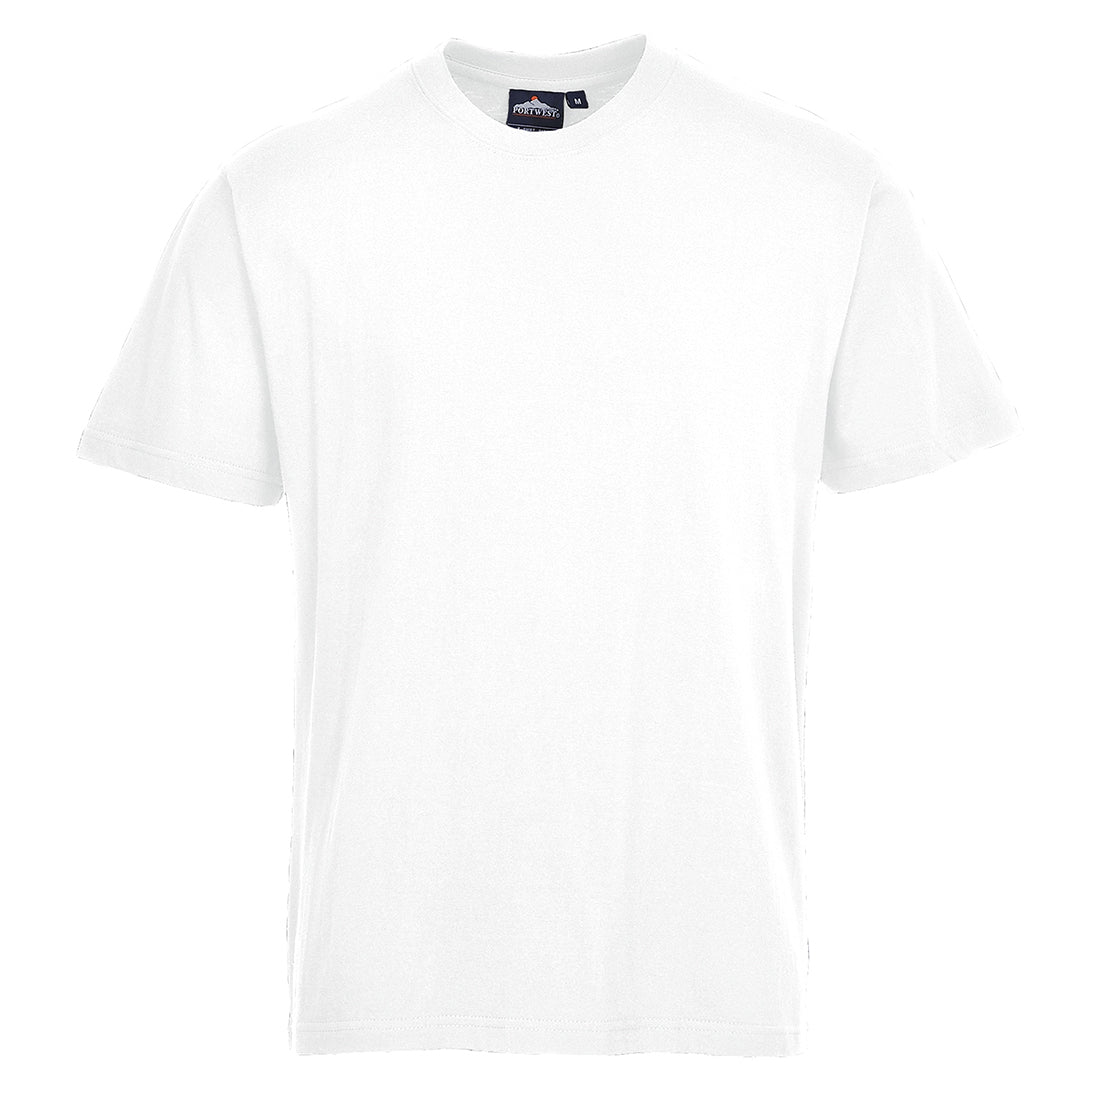 Turin Premium T-Shirt White - B195 Front